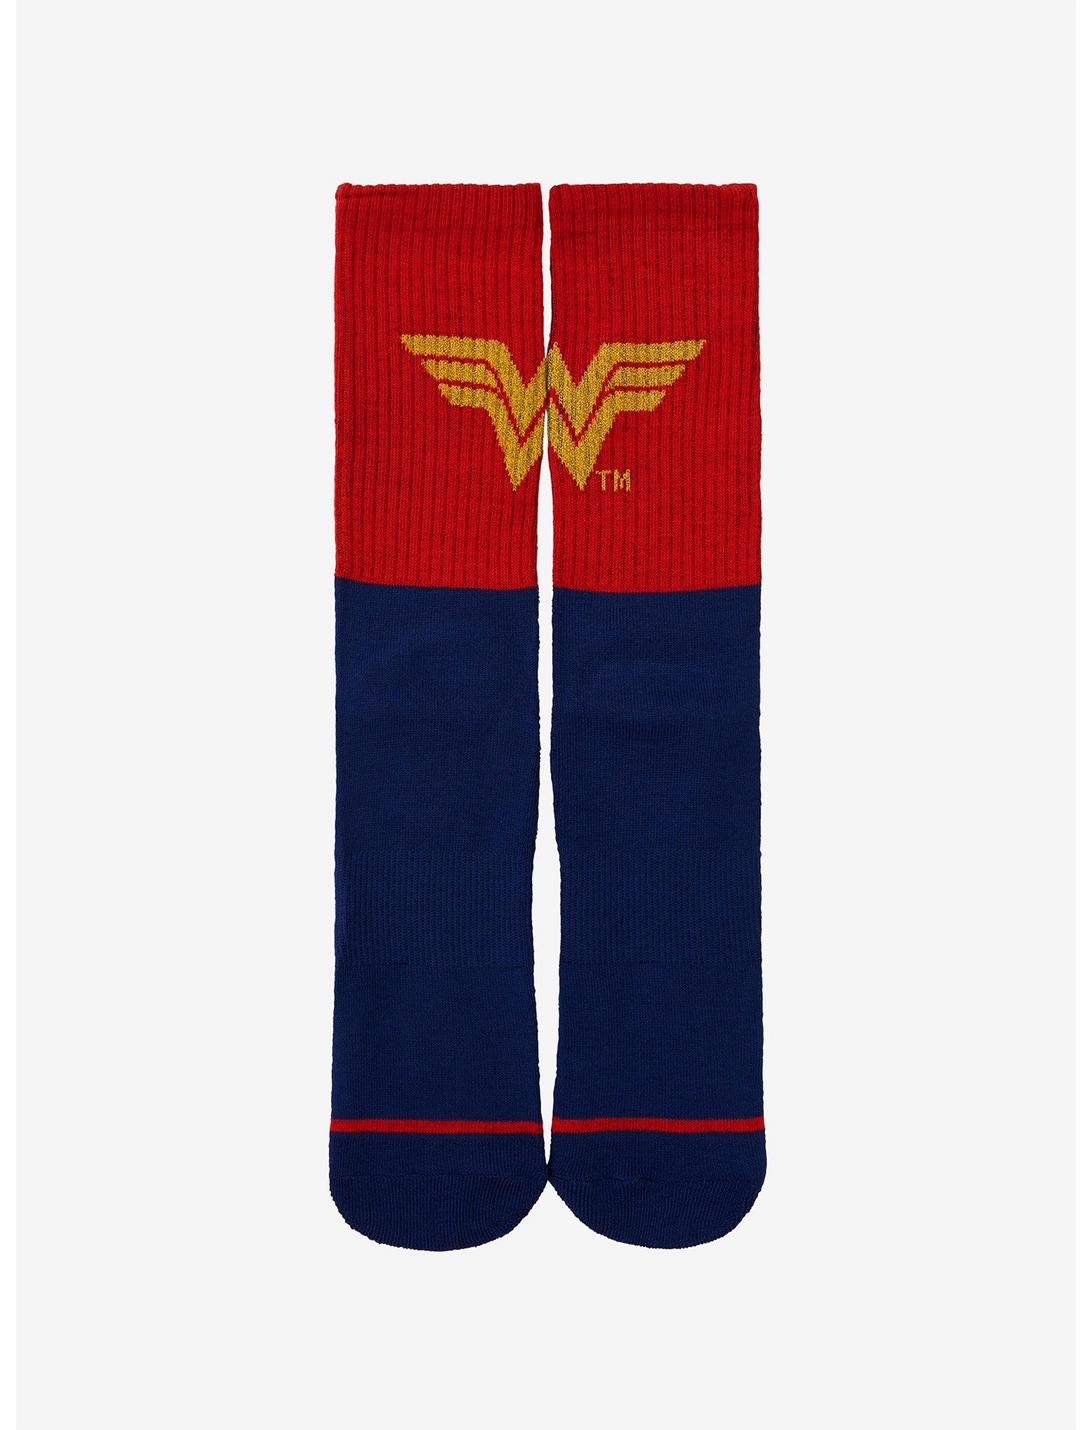 Wonder Woman 2-Tone Lurex Logo Crew Socks - BoxLunch Exclusive, , hi-res